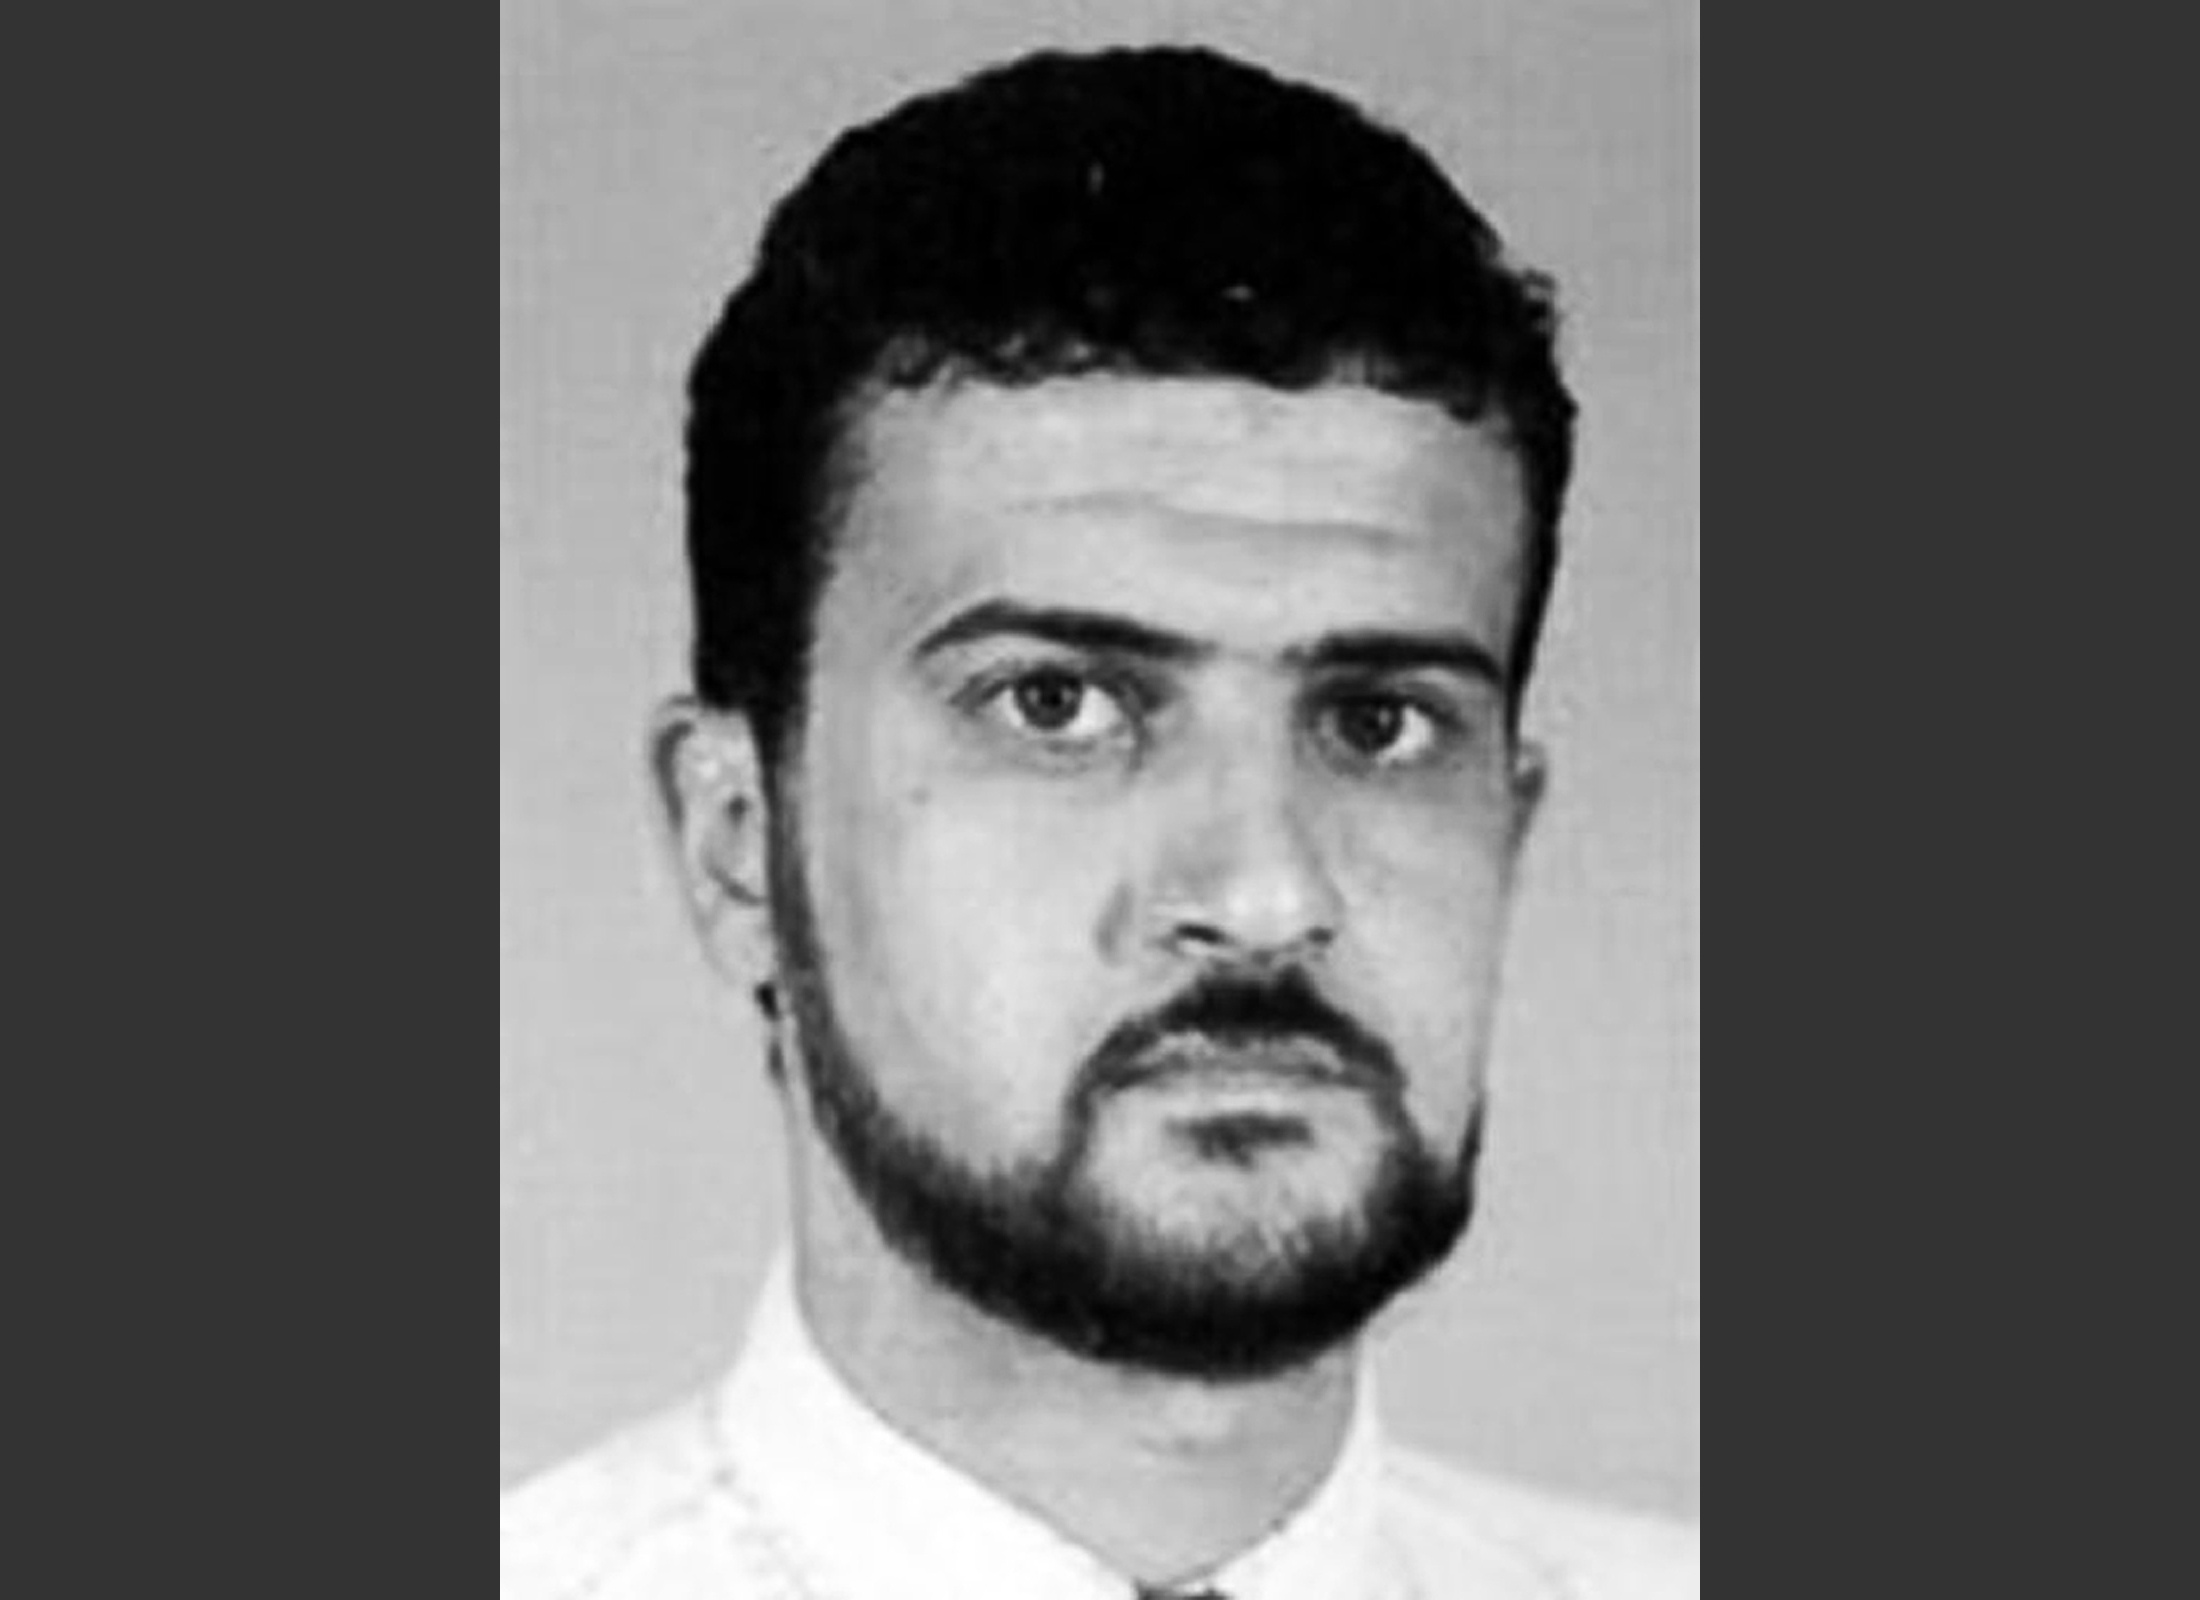 Abu Anas al-Libi
Accused of helping plan embassy attacks